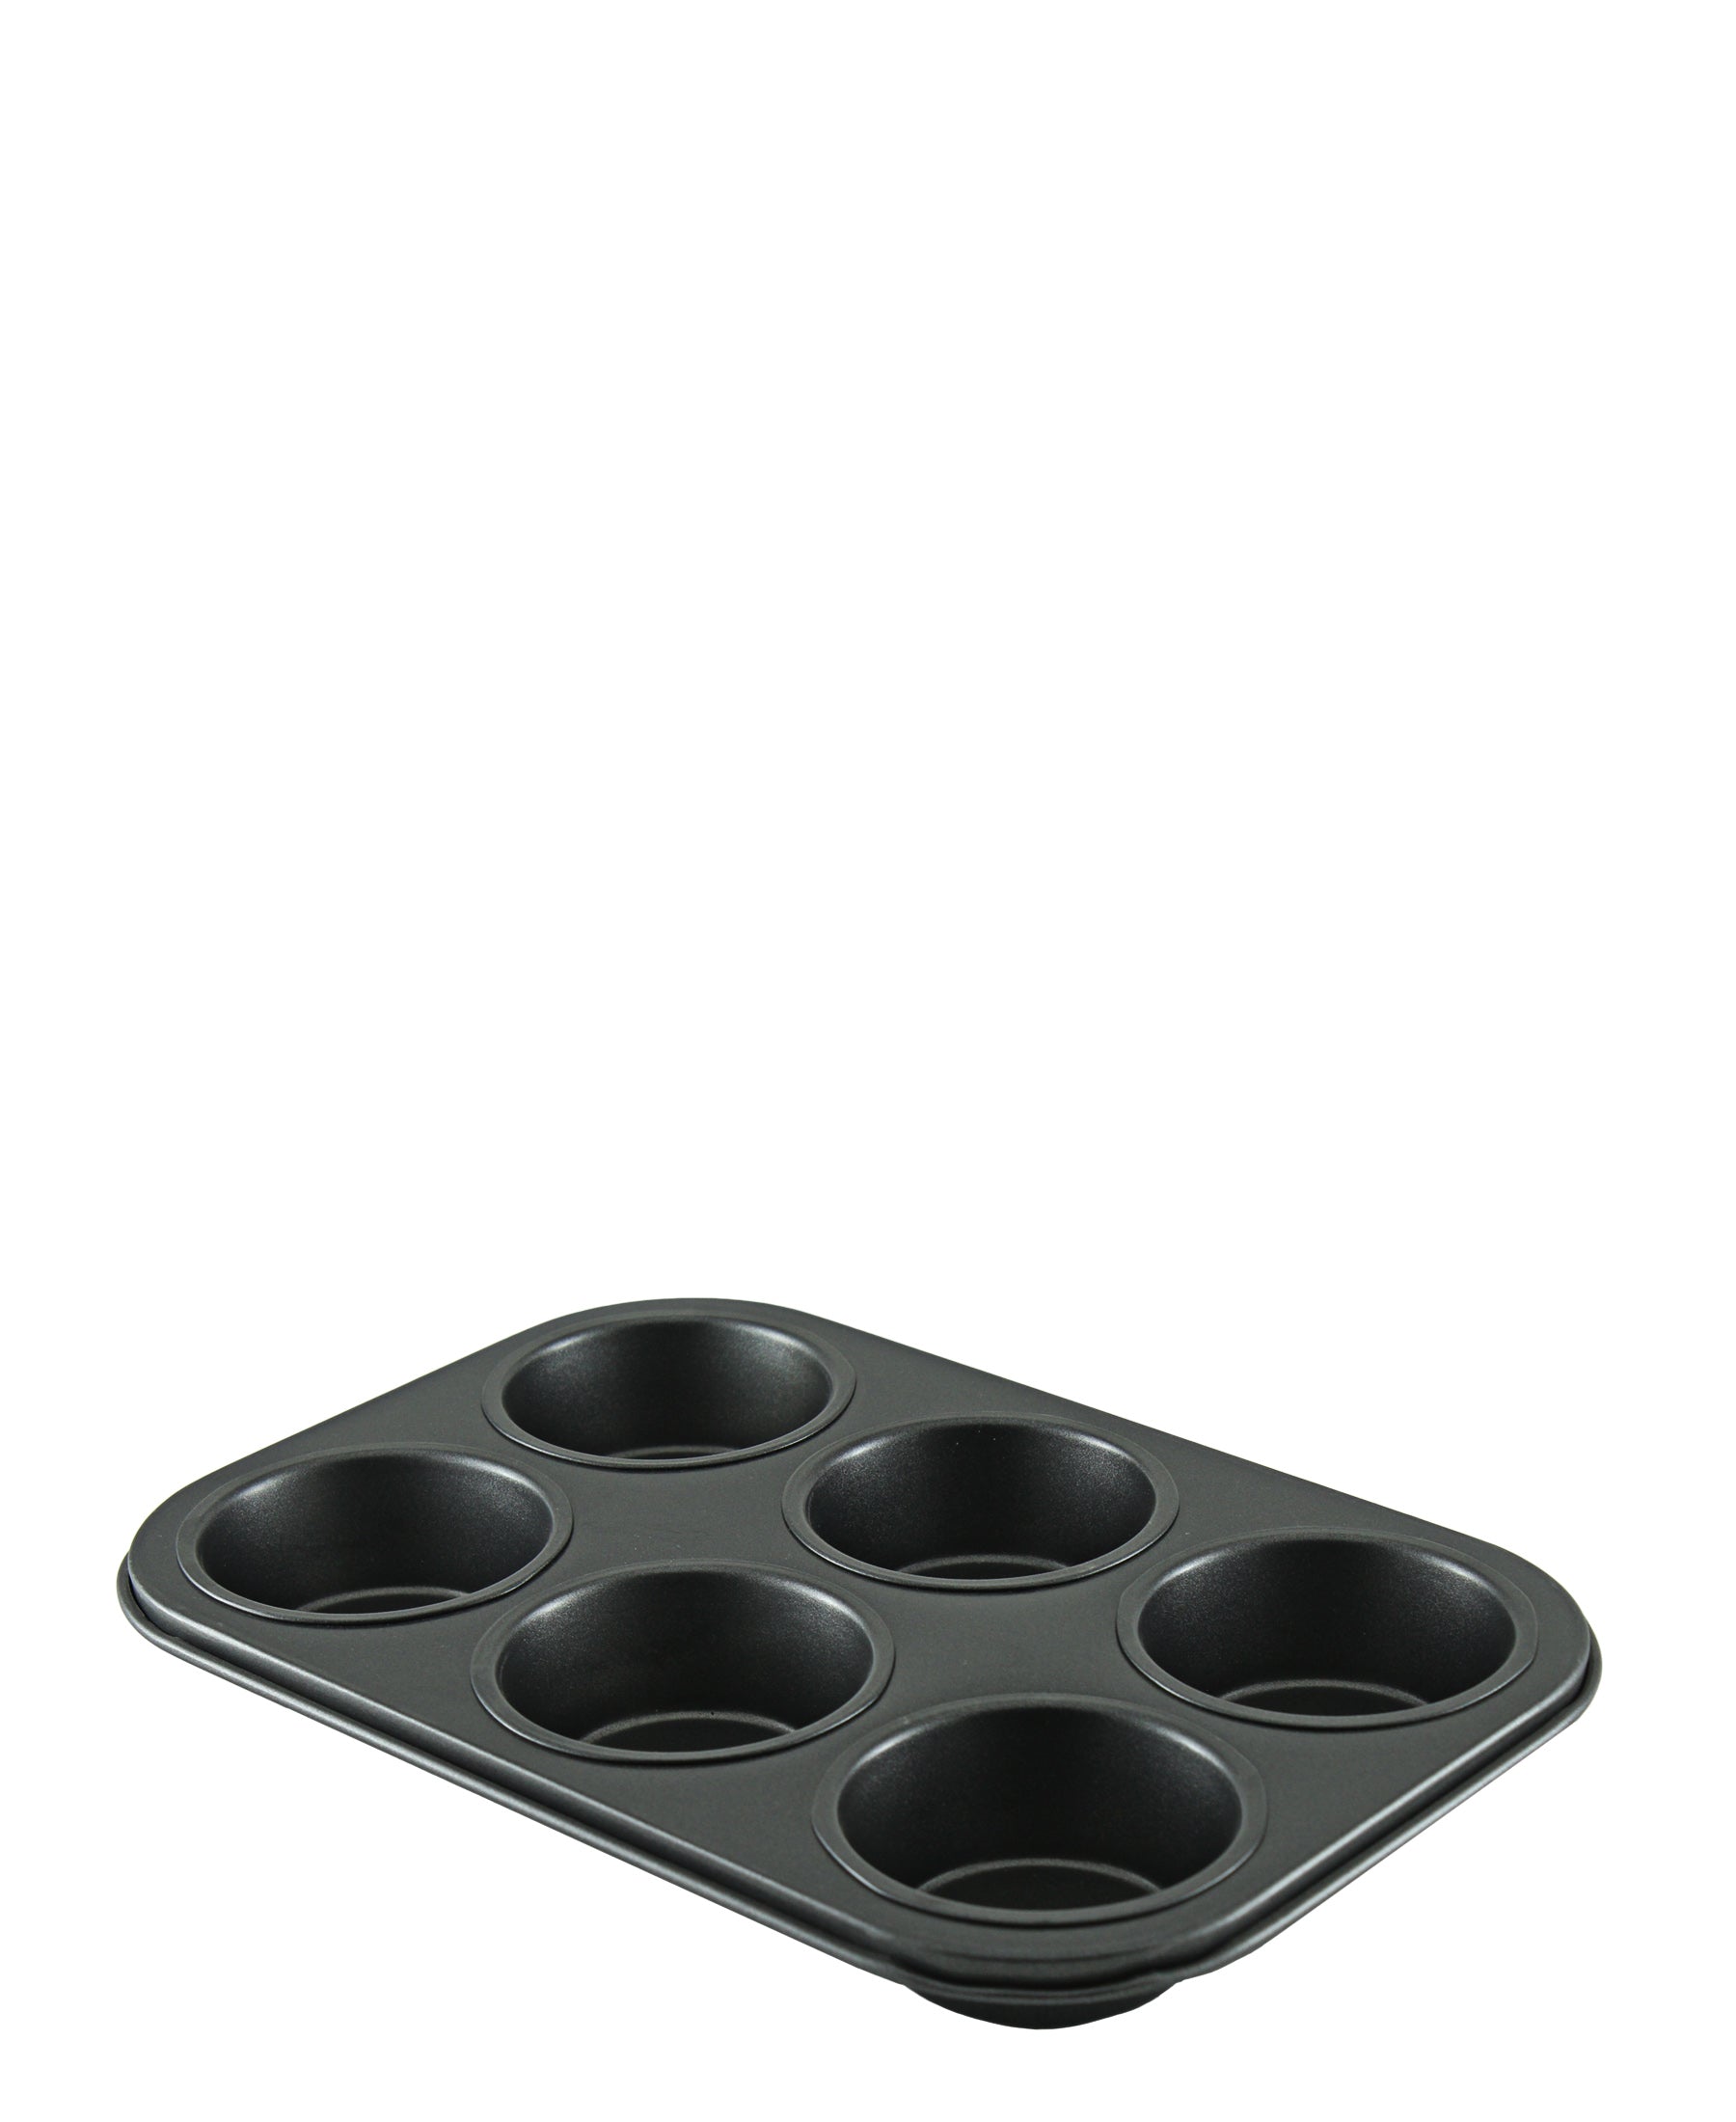 Metalix 6 Cup Muffin Pan - Black